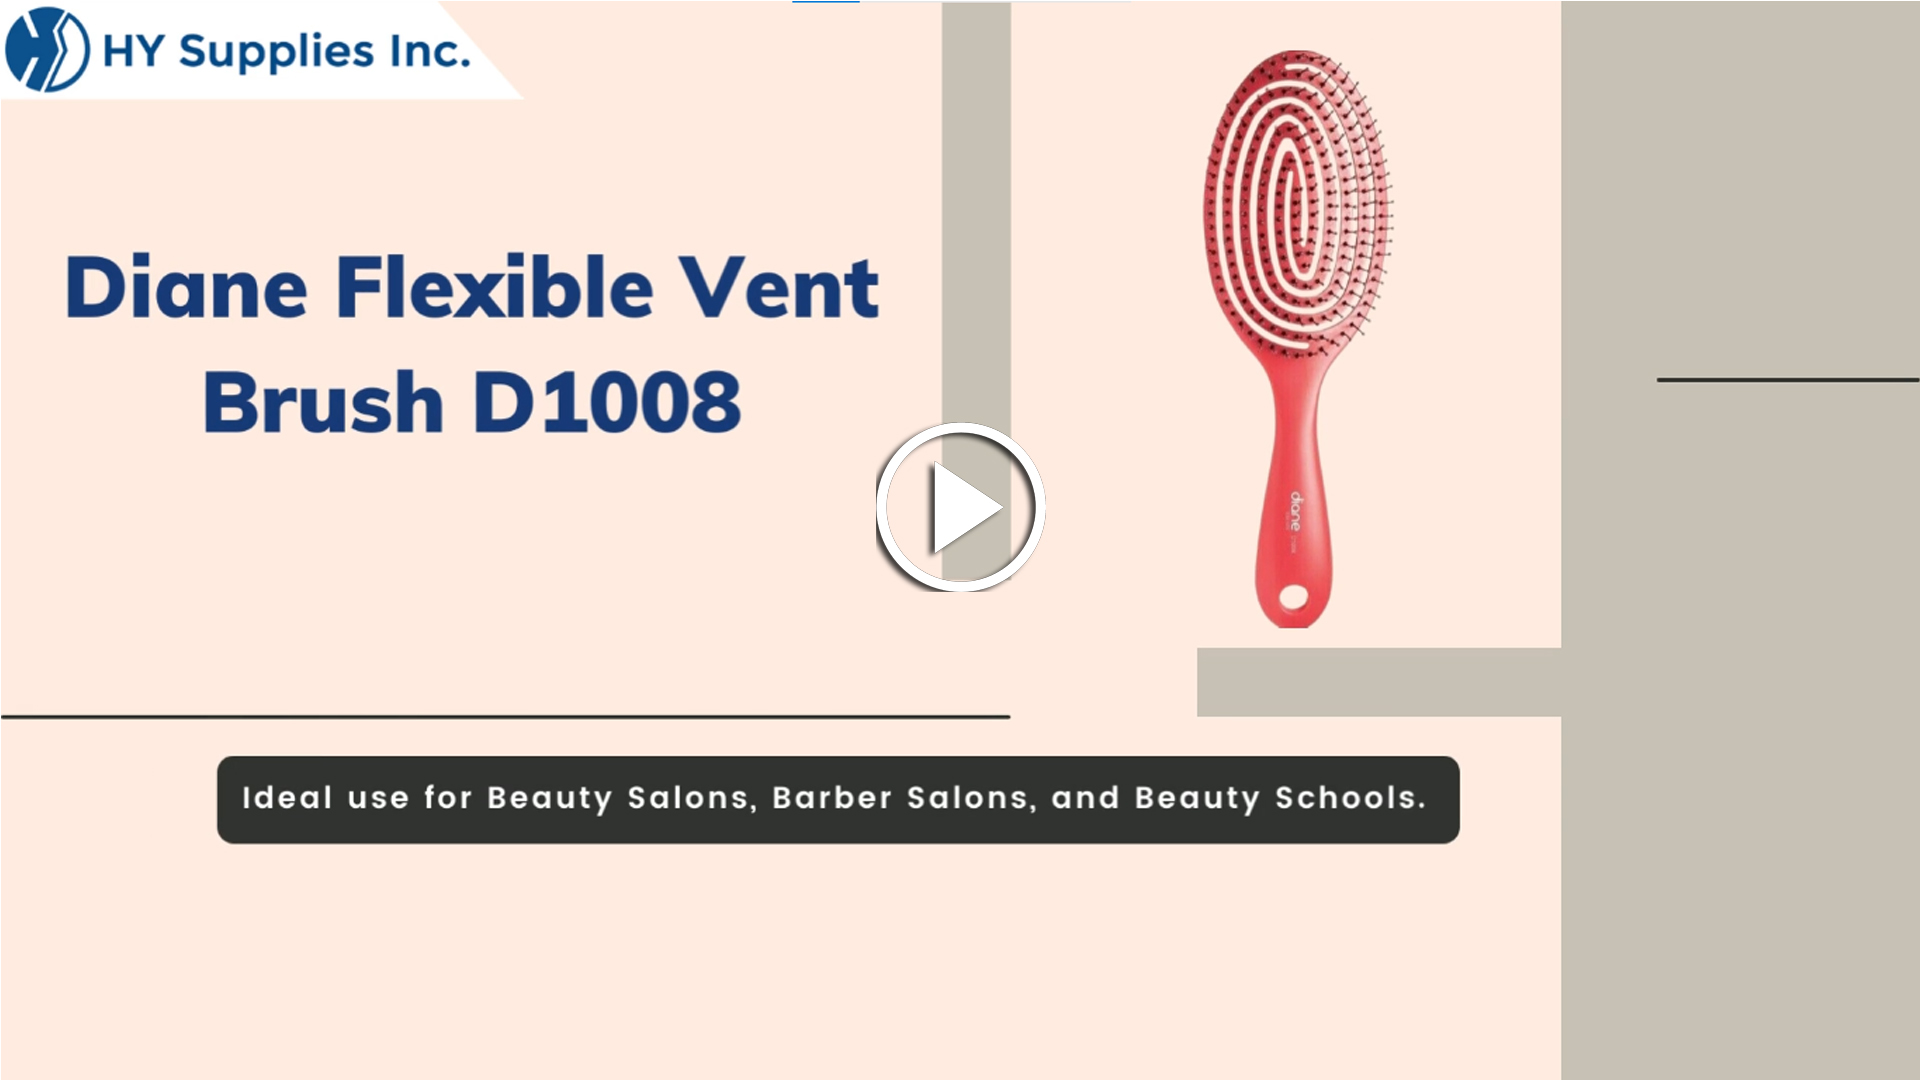 Diane Flexible Vent Brush D1008